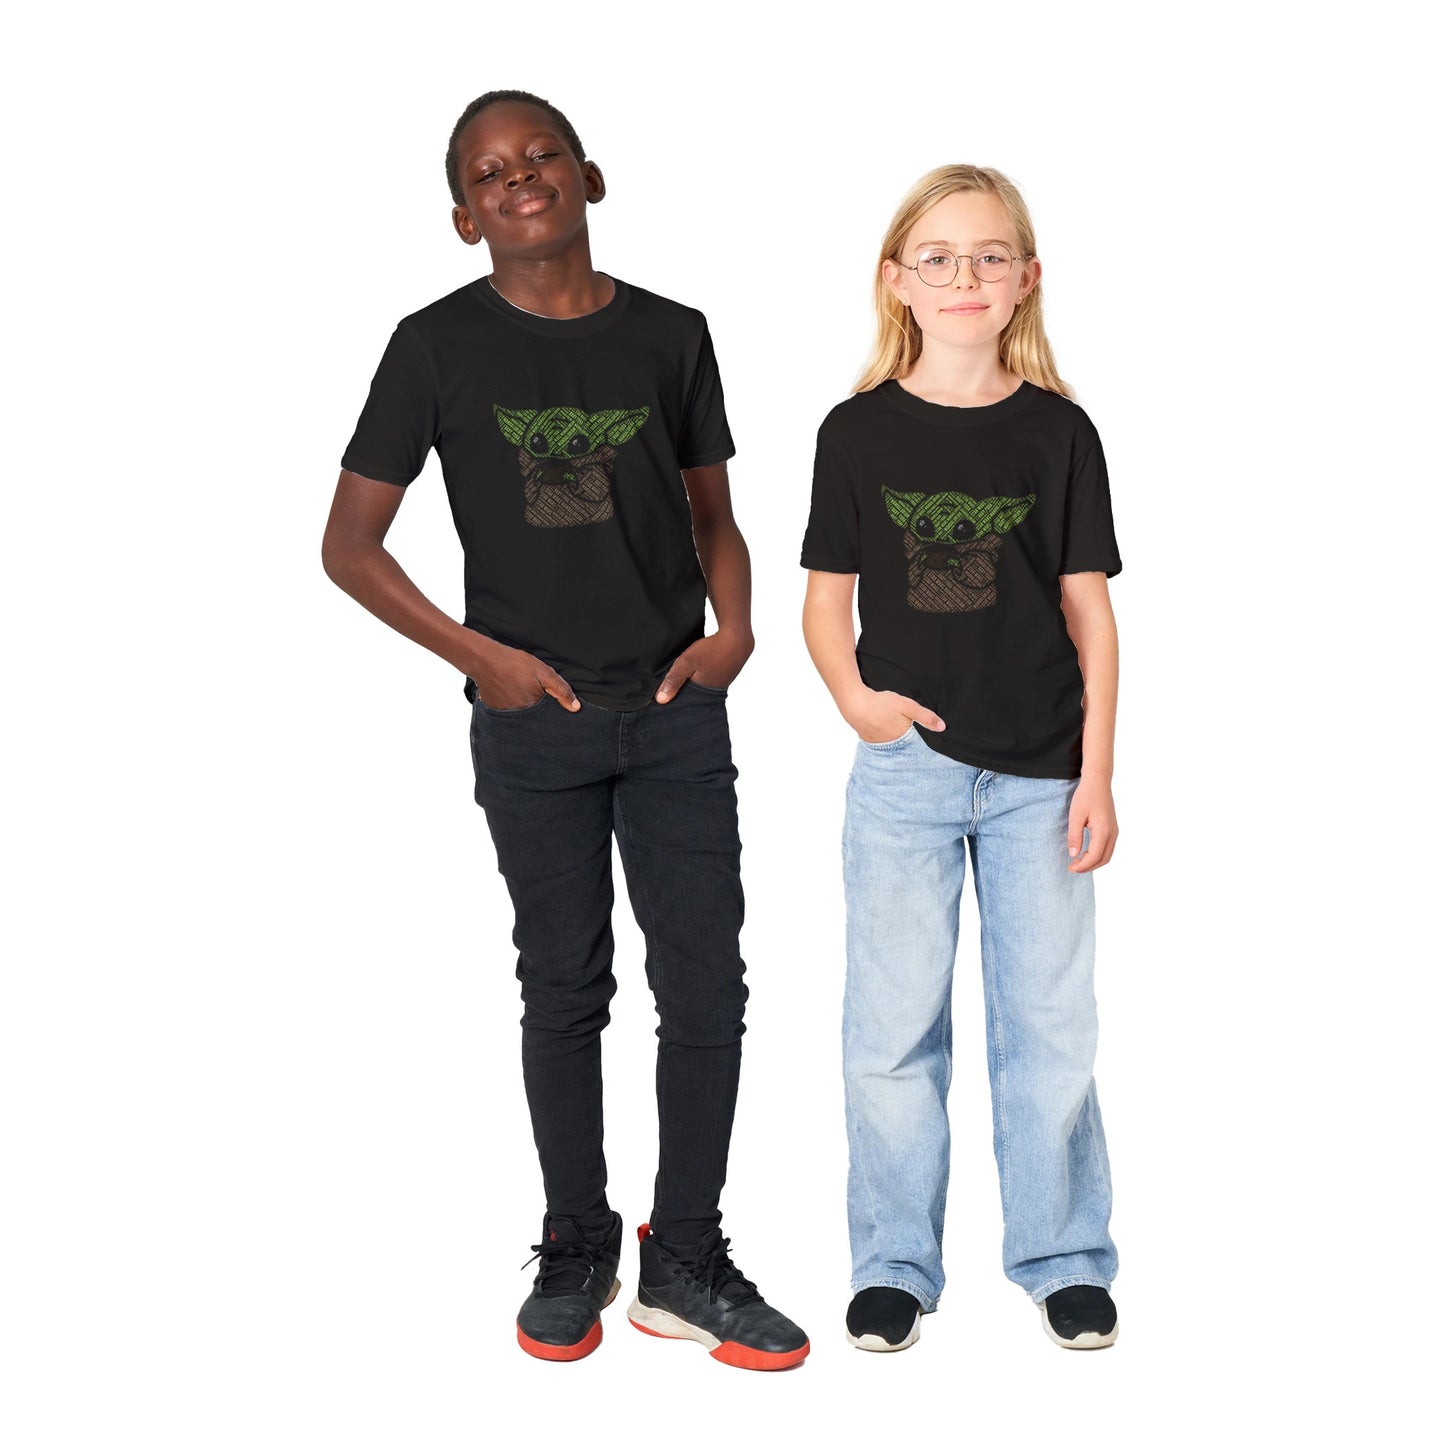 Artwork Kinder-T-Shirt – Baby Yoda Kalligram Artwork – klassisches Kinder-T-Shirt 